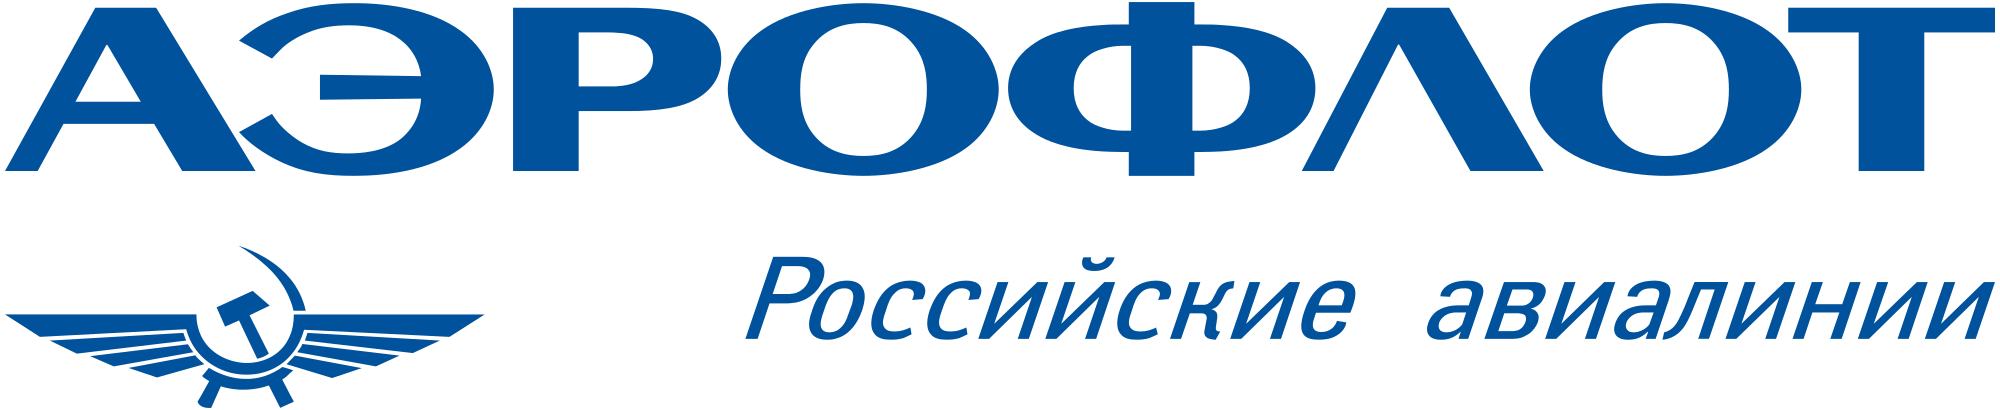 Open Hdpng.com  - Aeroflot Russian Airlines, Transparent background PNG HD thumbnail